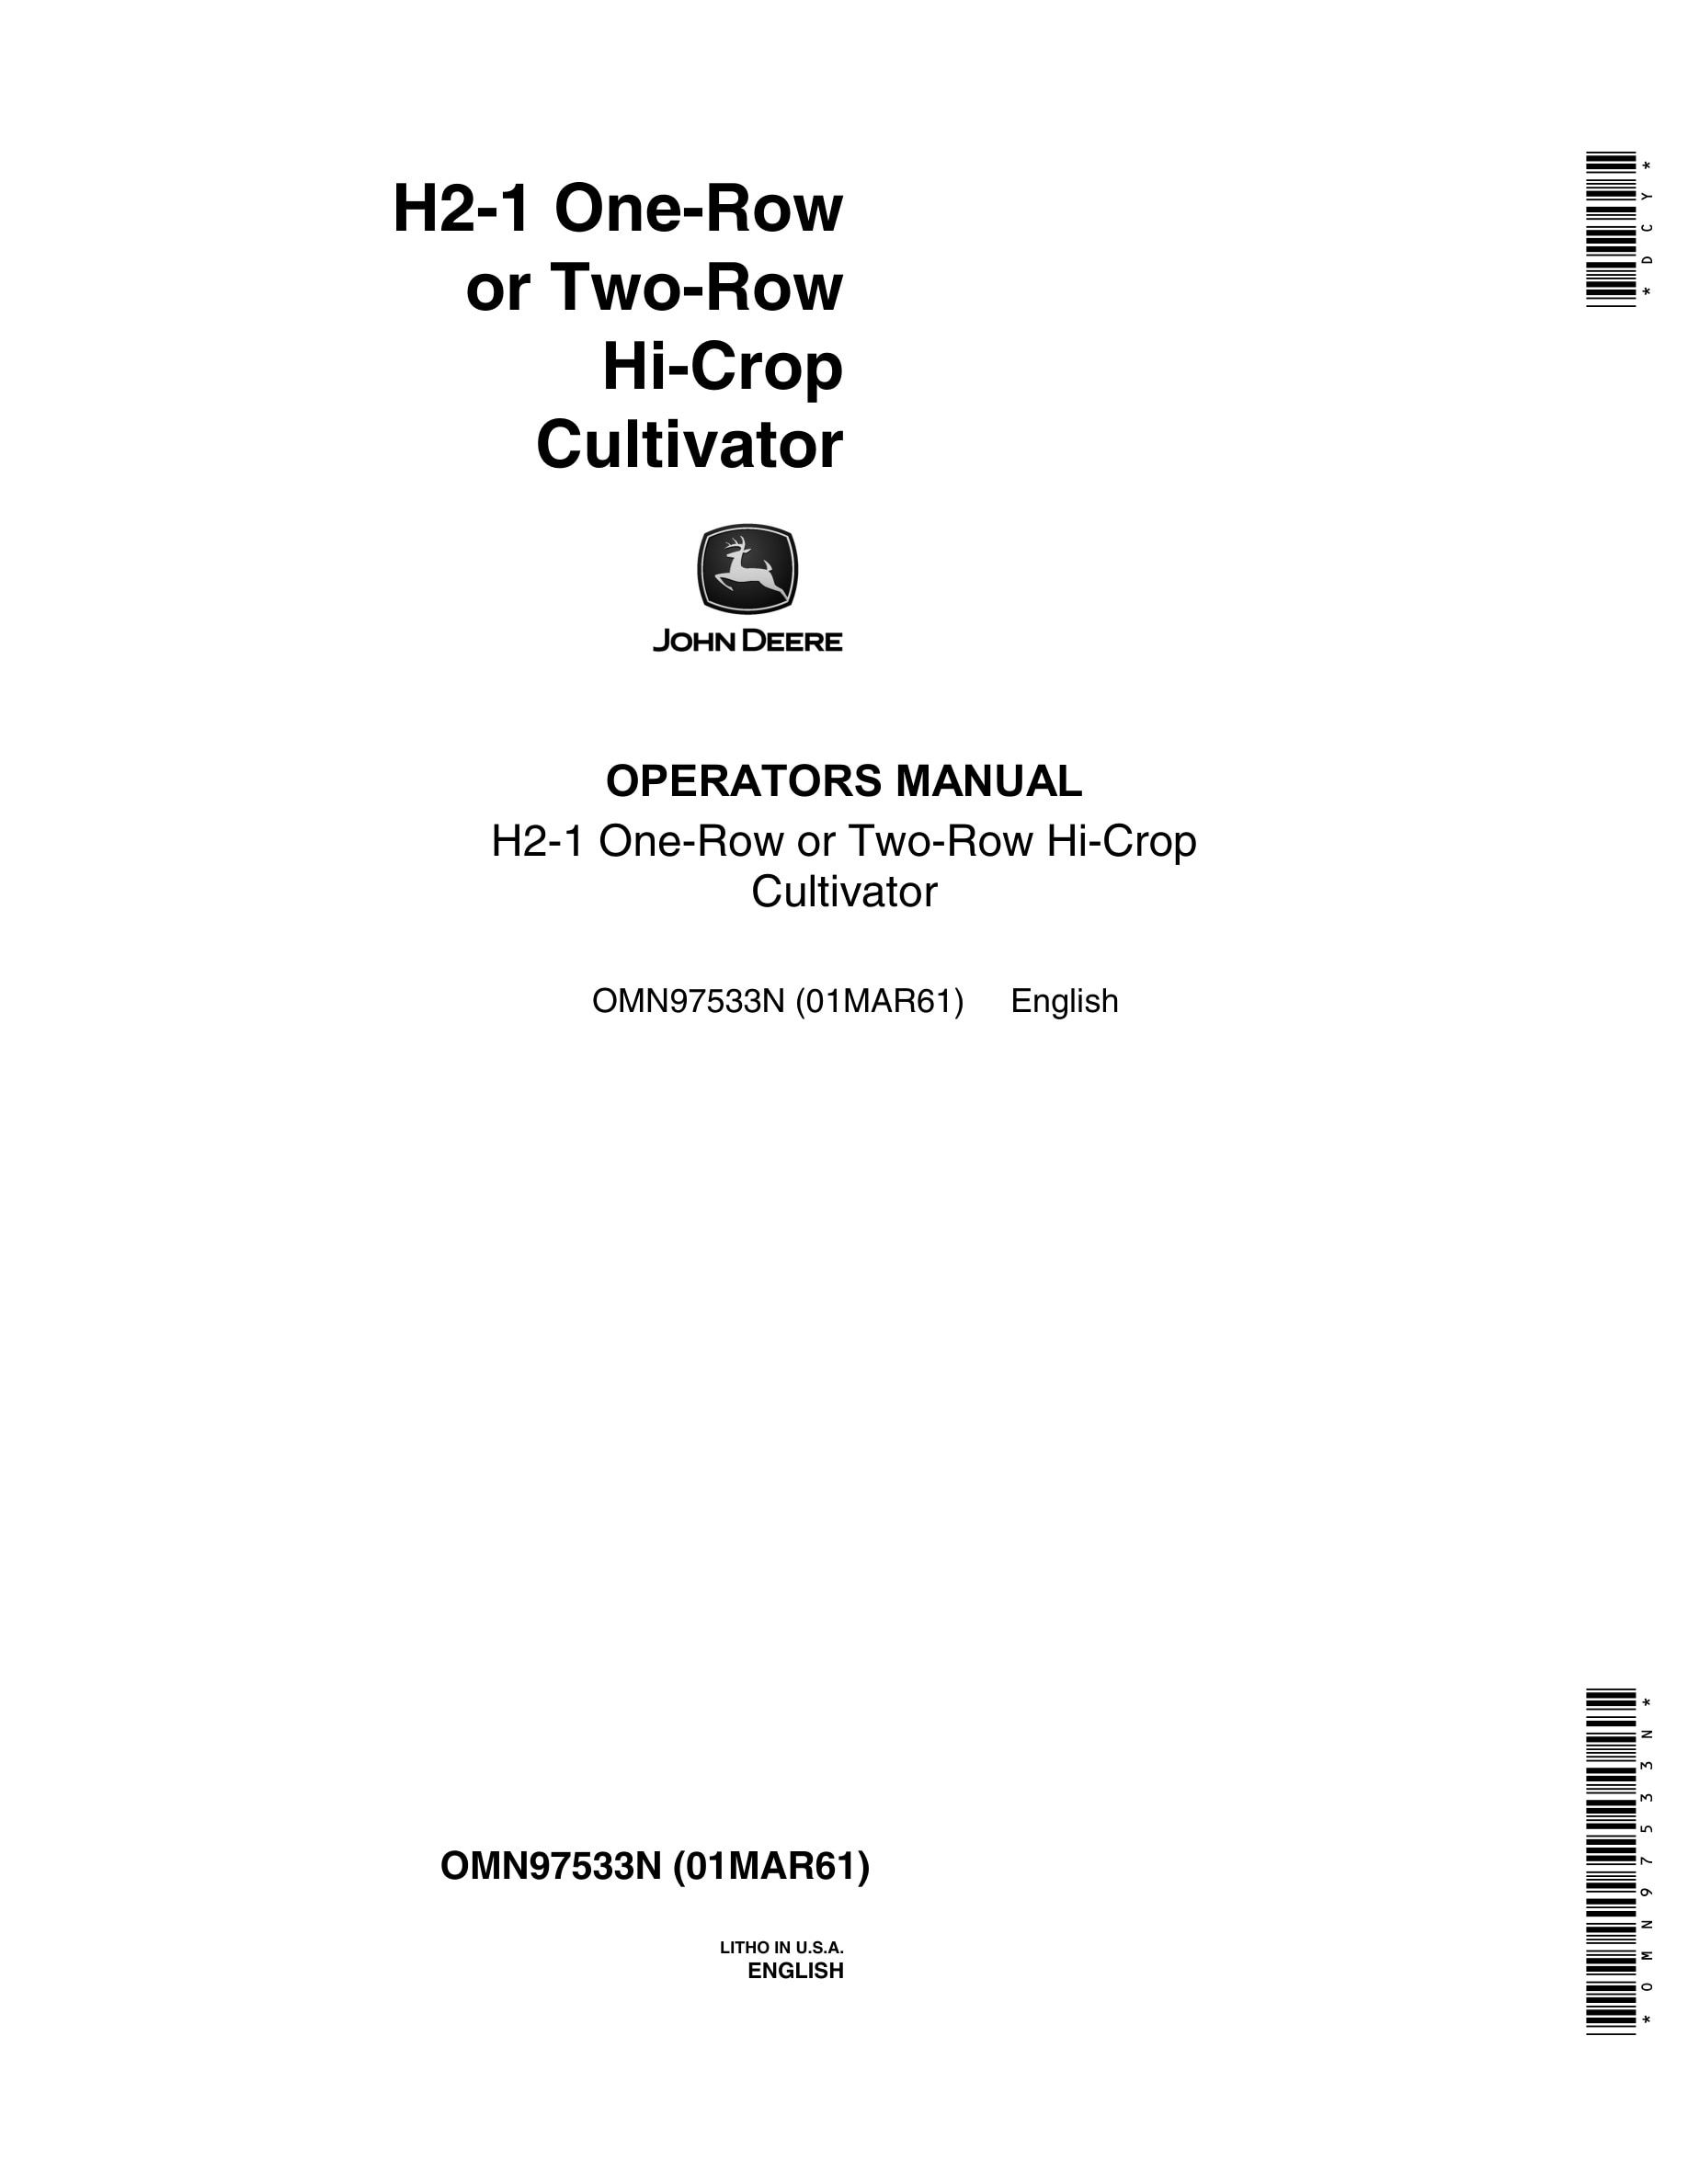 John Deere H2-1 One-Row or Two-Row Hi-Crop CULTIVATOR Operator Manual OMN97533N-1